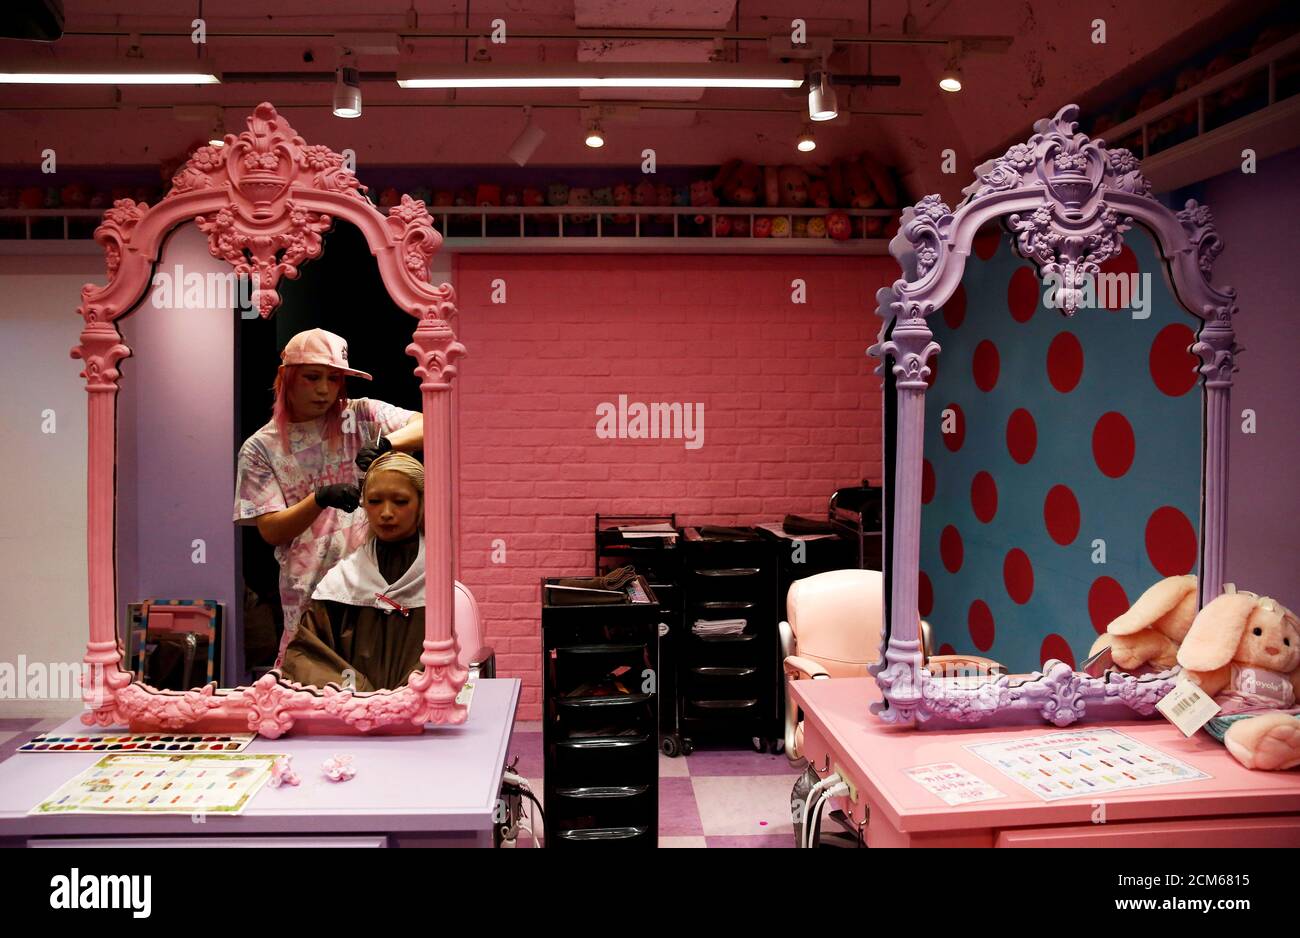 Pink Salon Japan